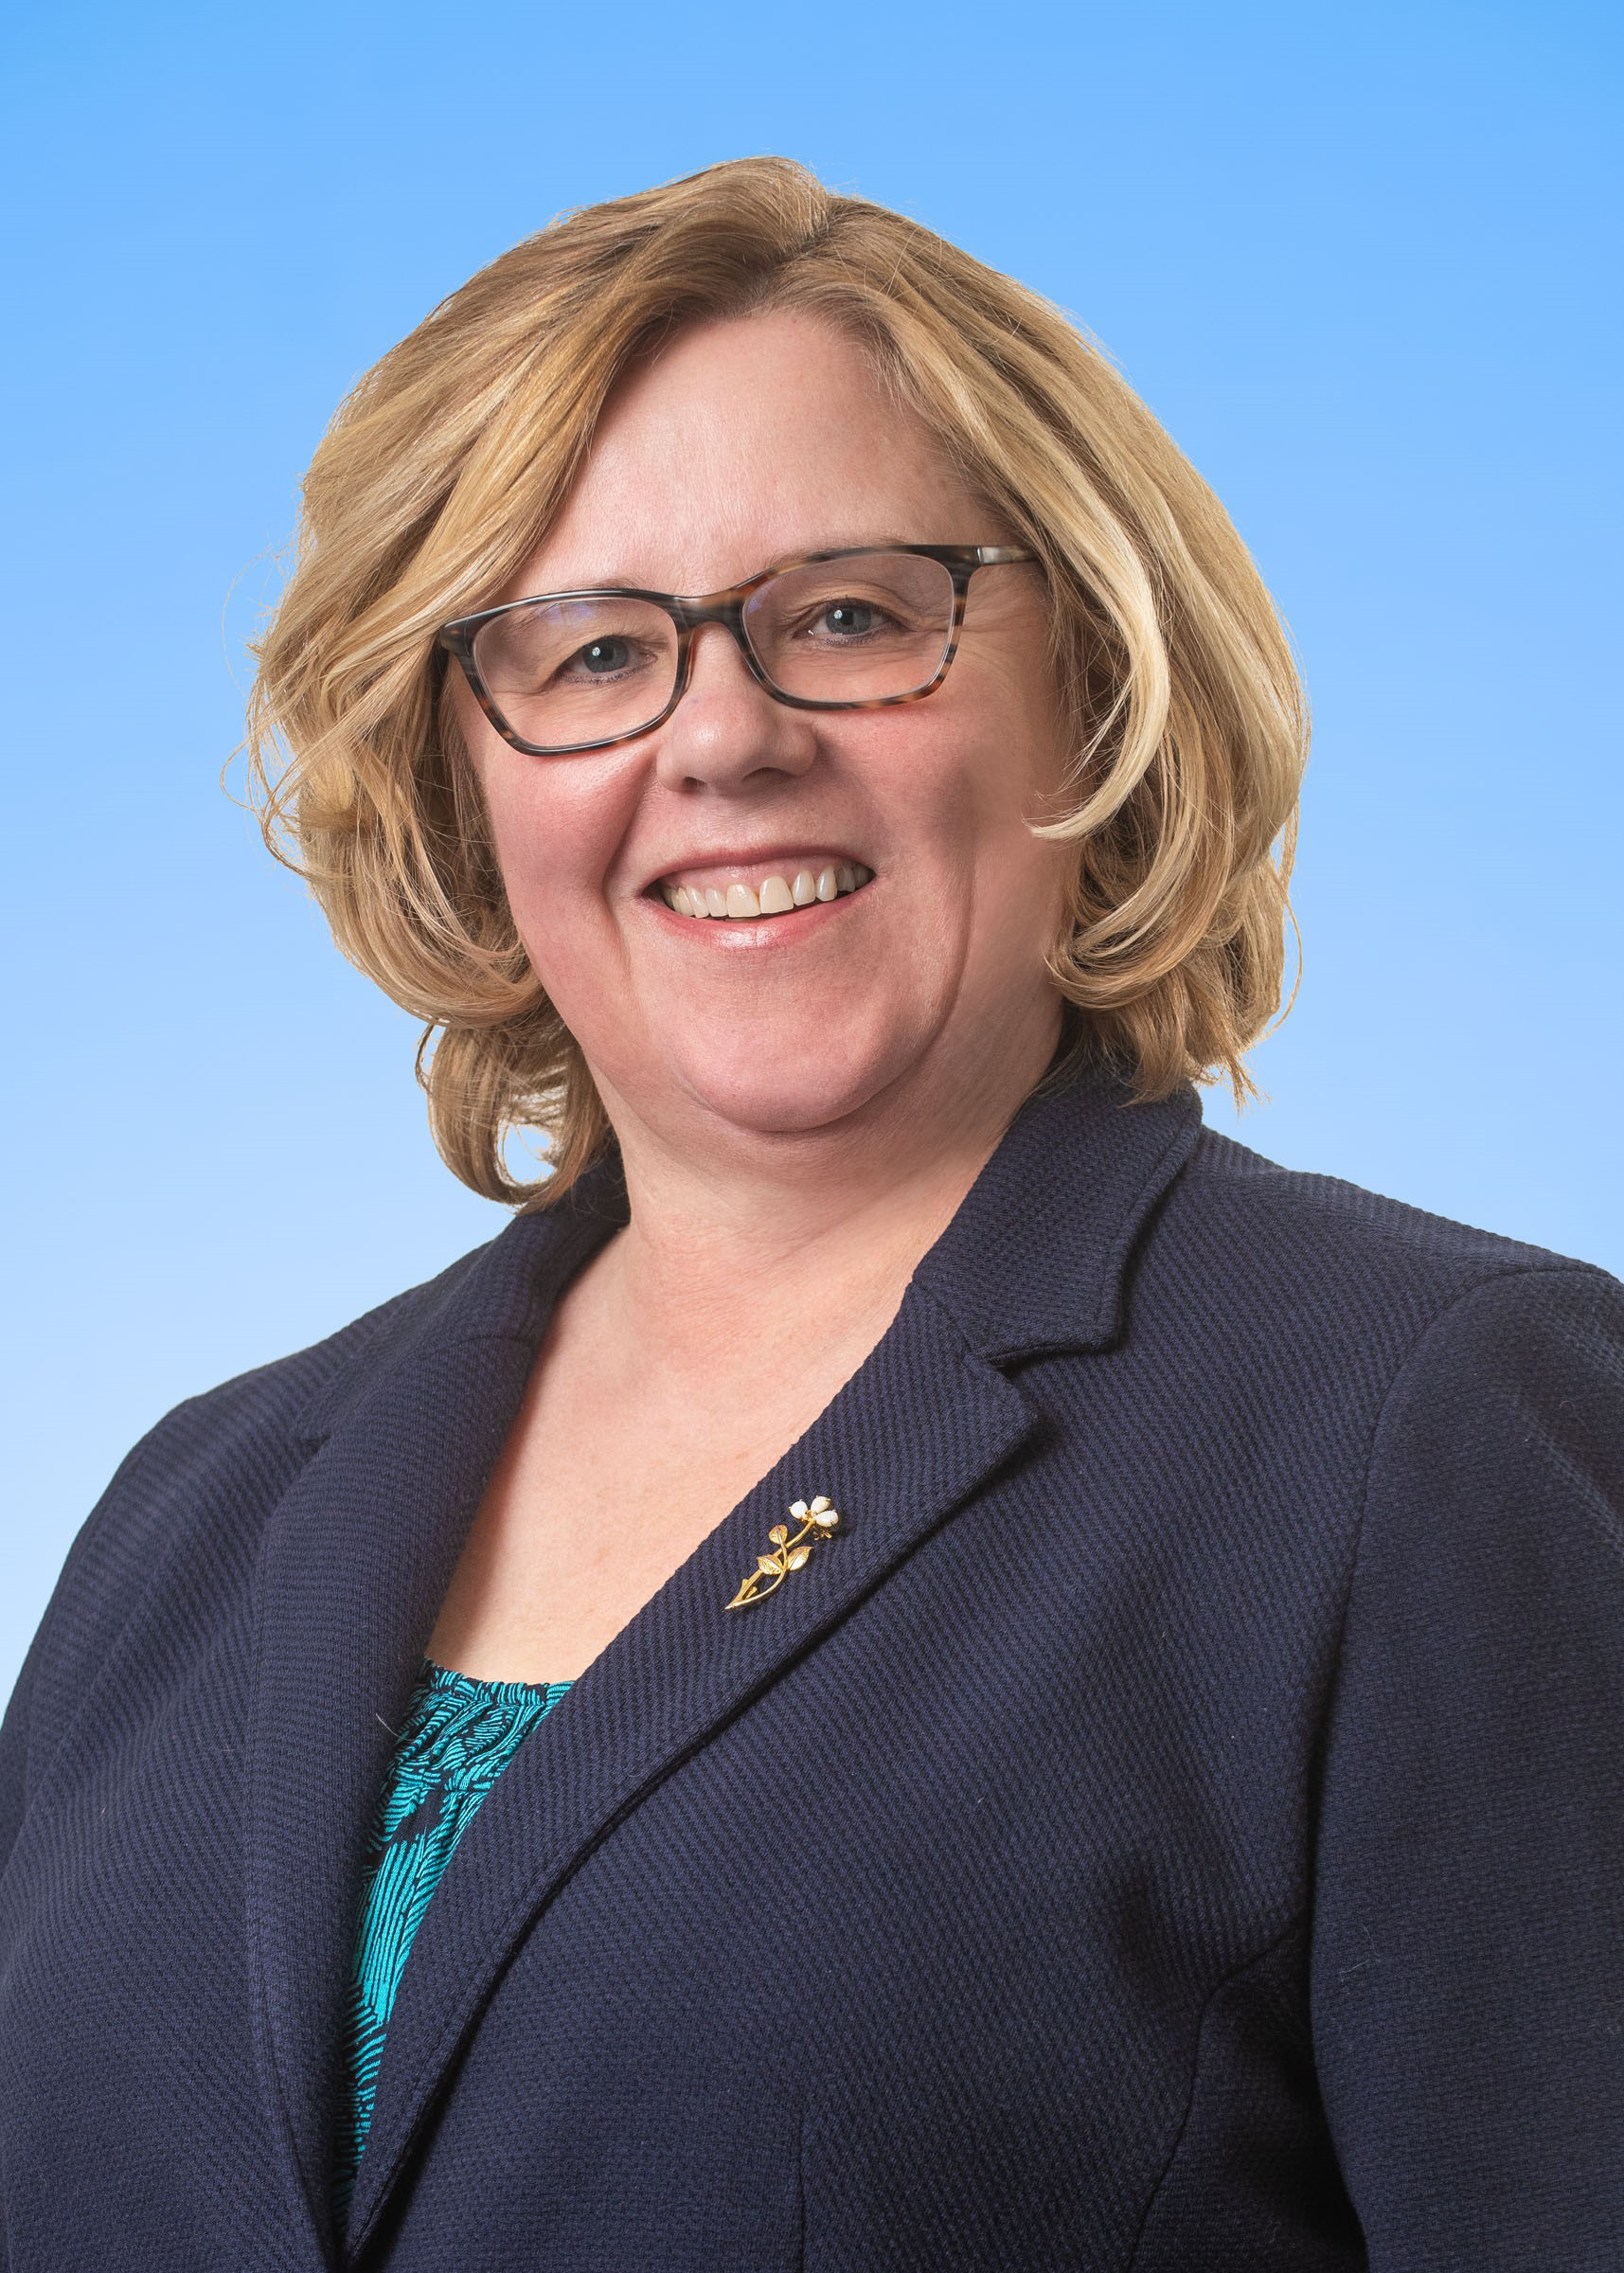 Kay Schmidt, Catalent's Senior Vice President, Technical Operations